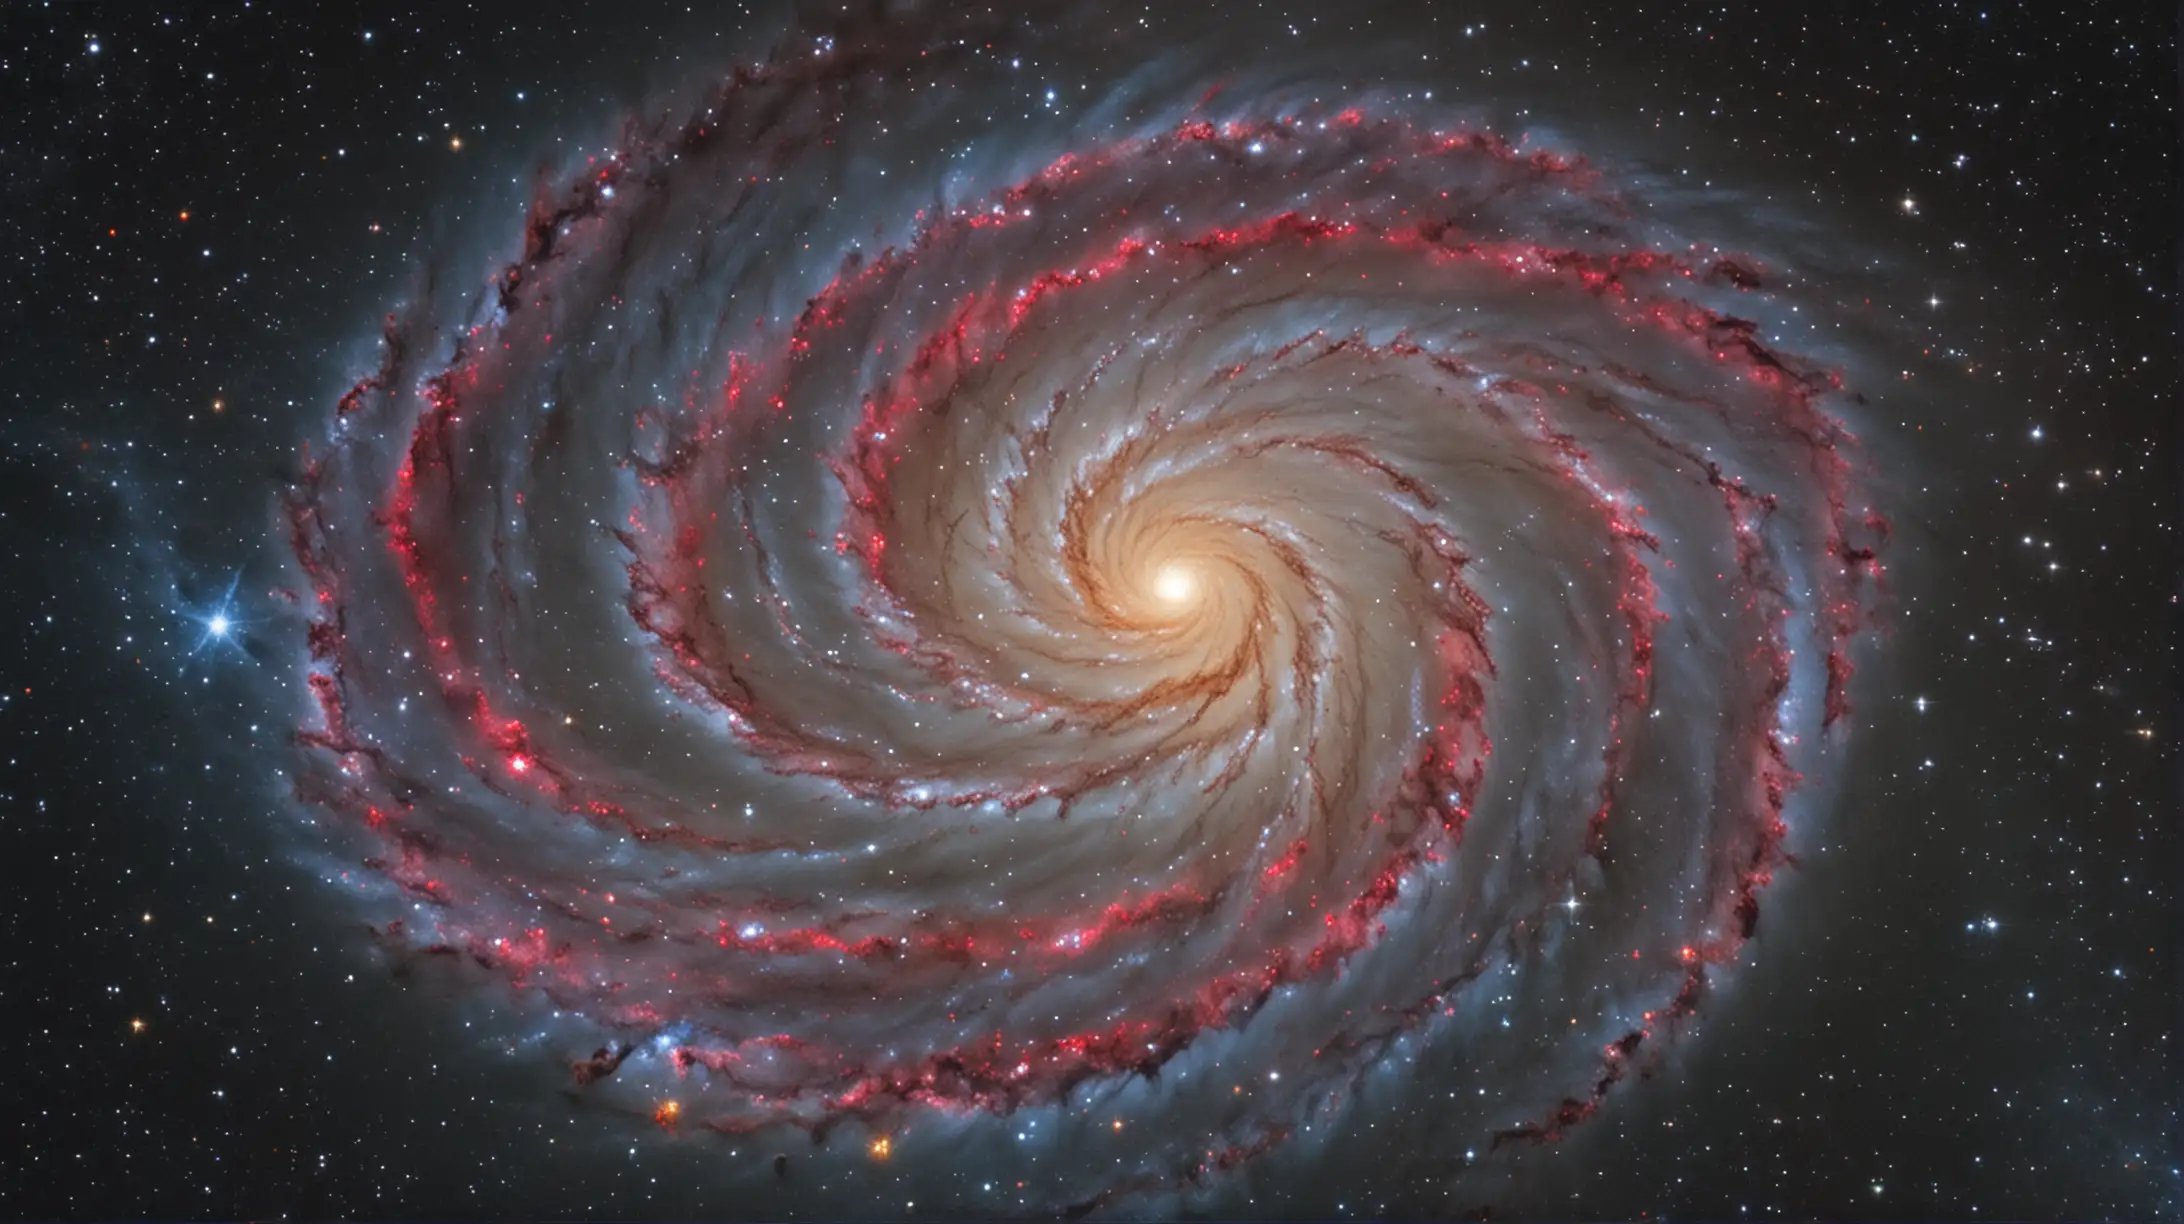 Mesmerizing Spiral Galaxy in Deep Space